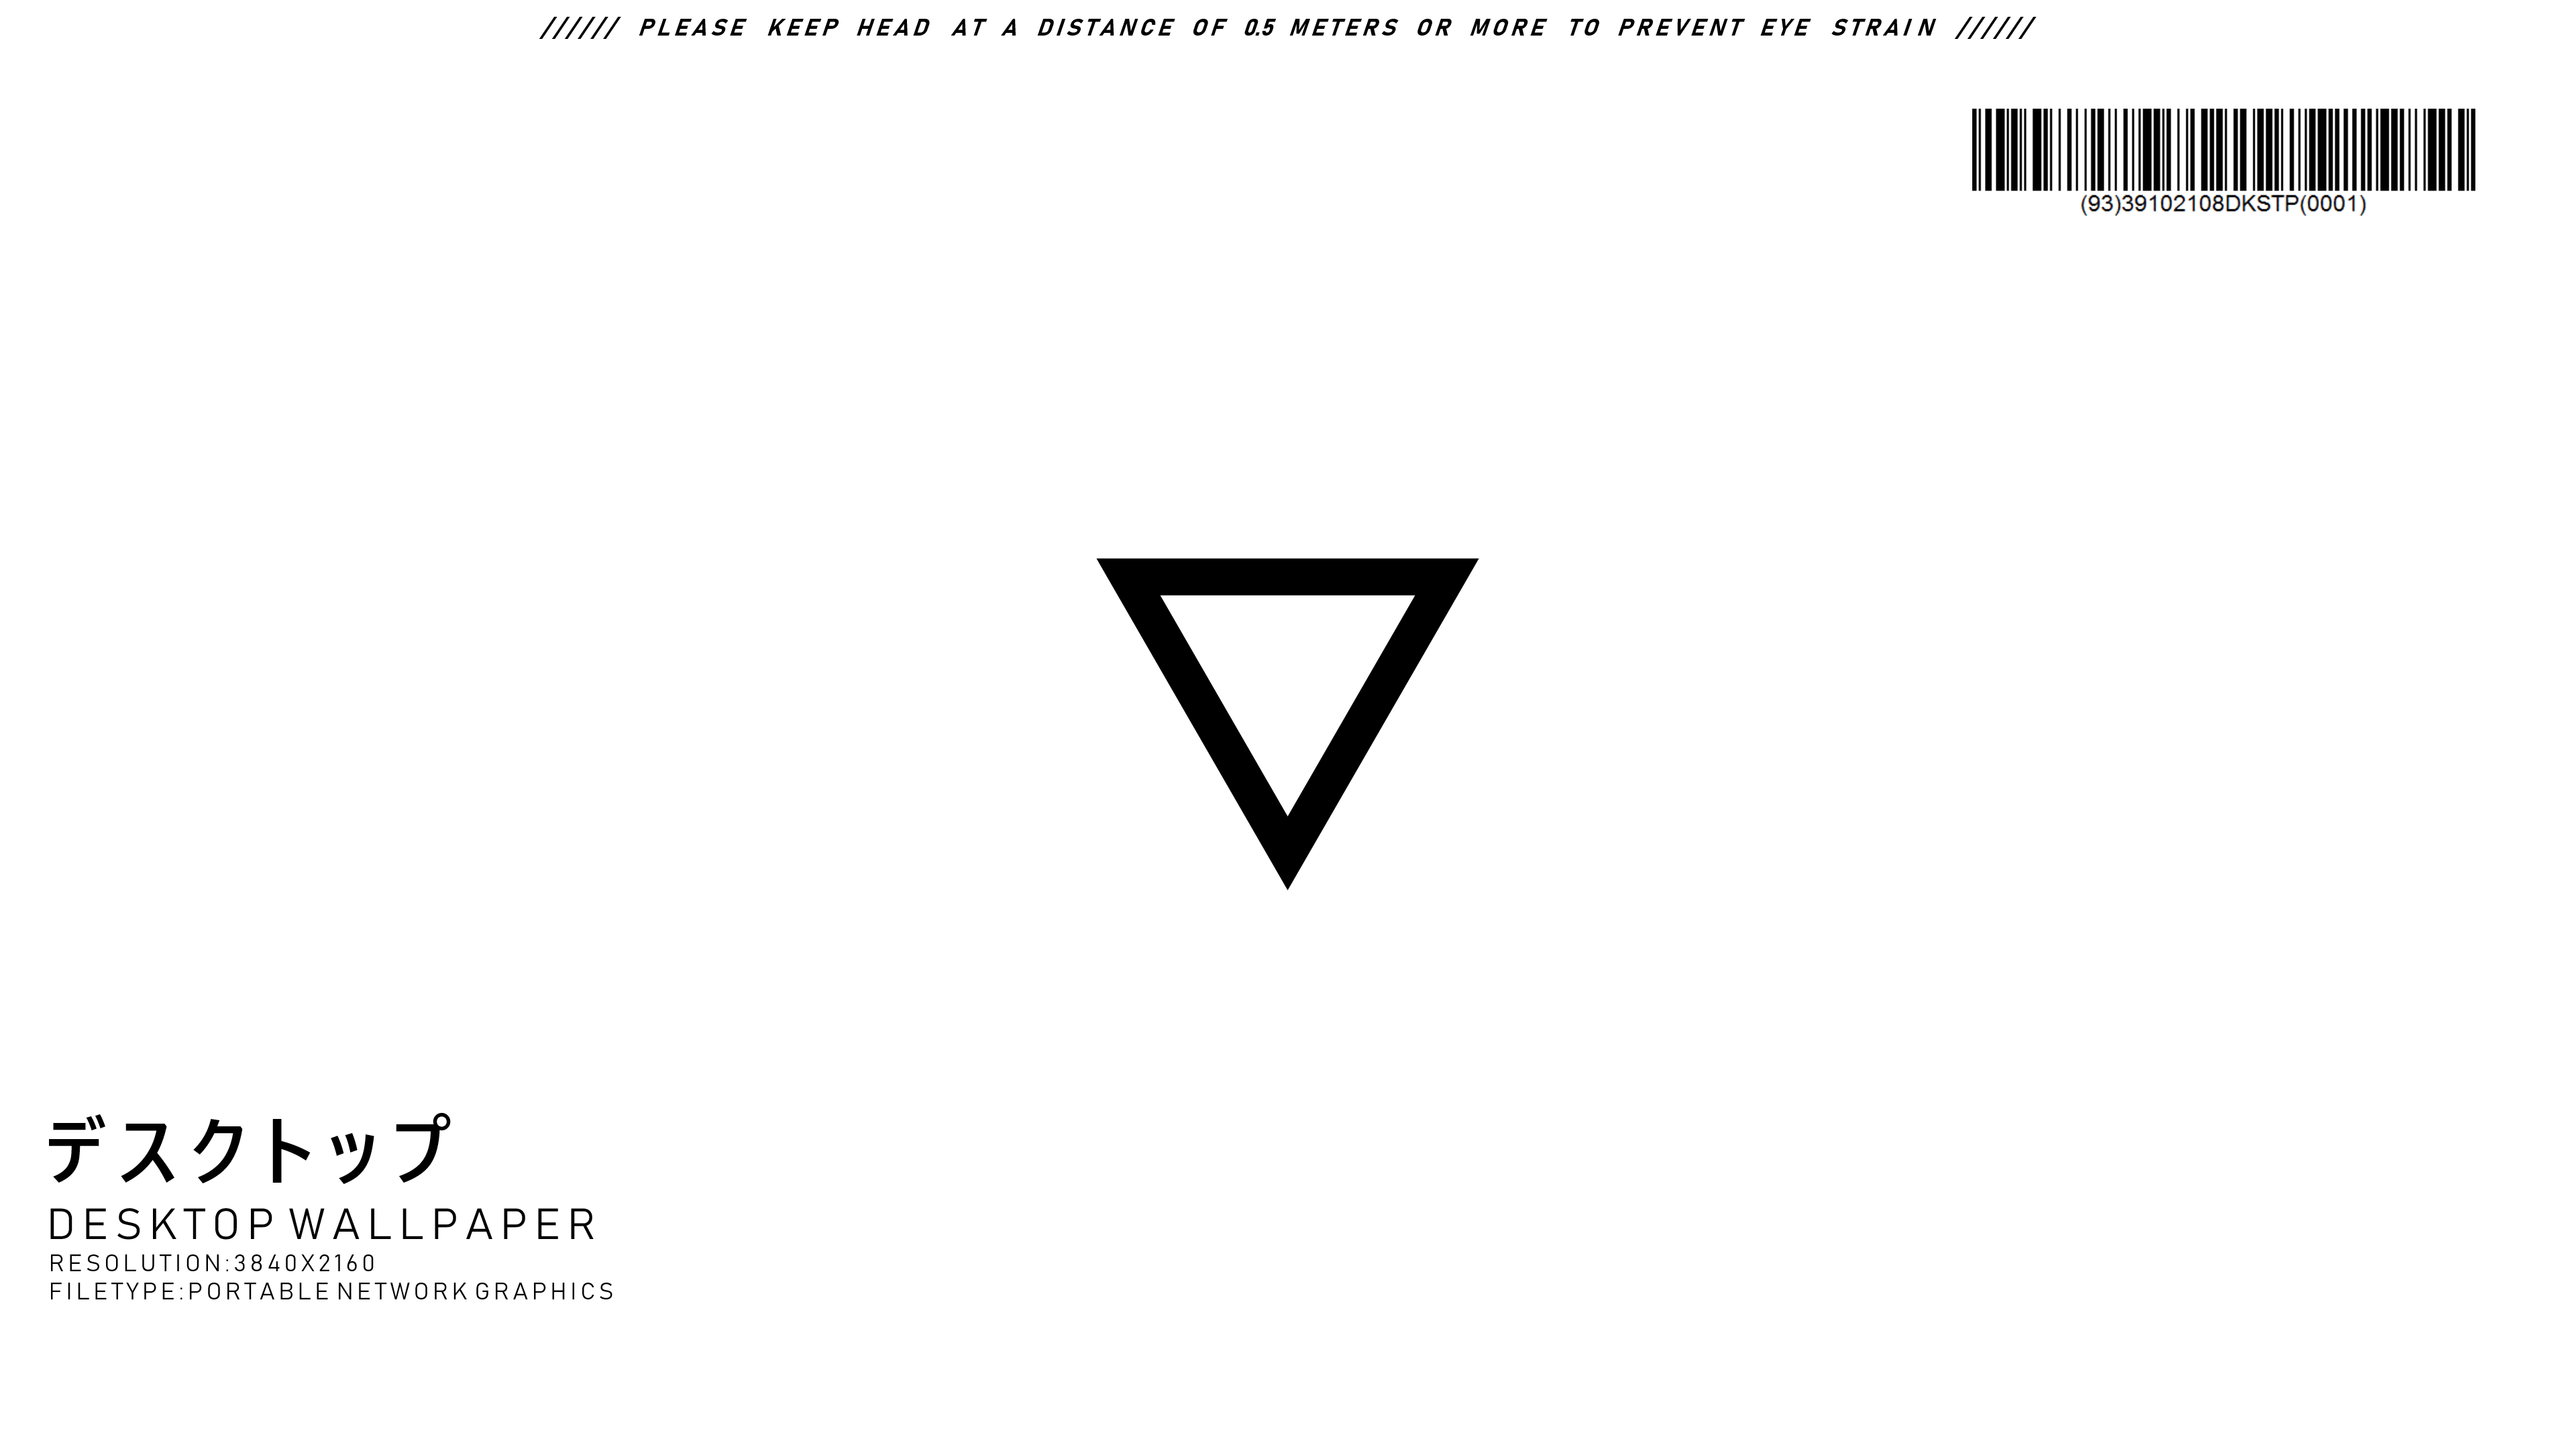 I created a futuristic / cyberpunk themed minimalist